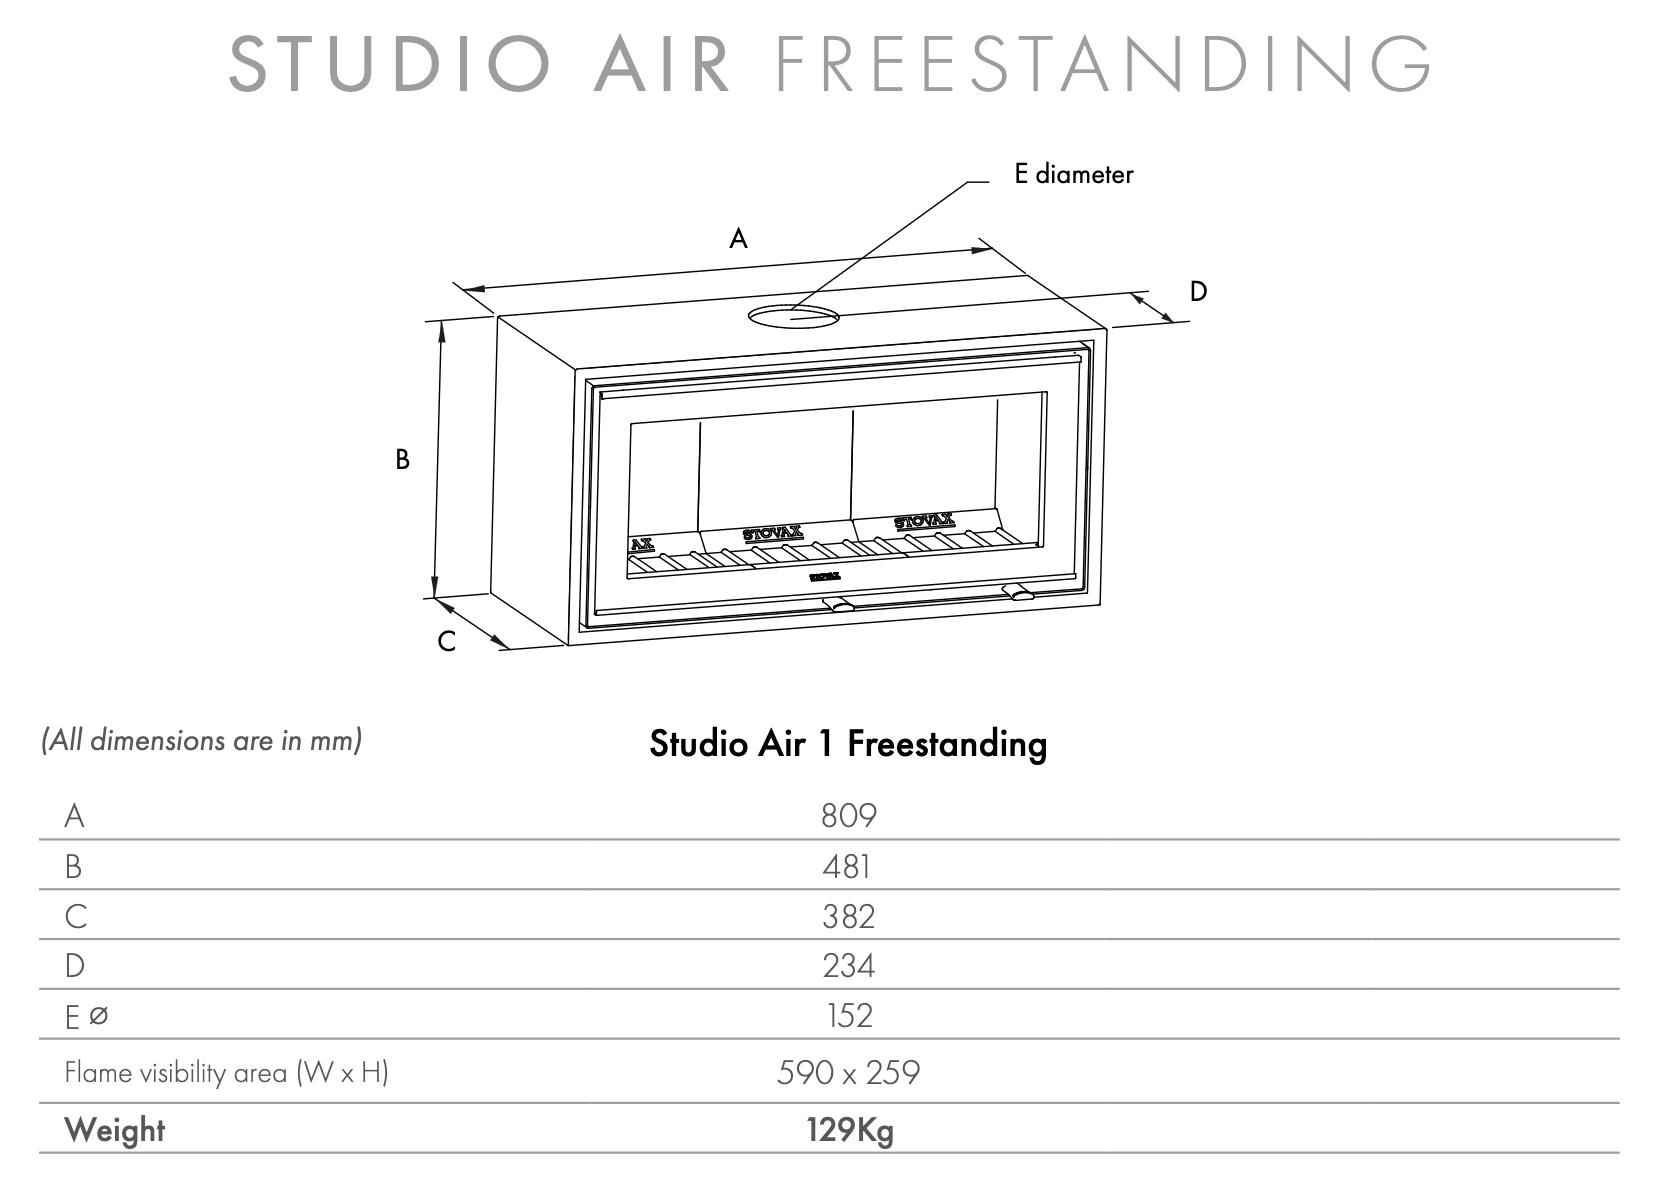 Stovax Studio 1 Air Freestanding Dimensions